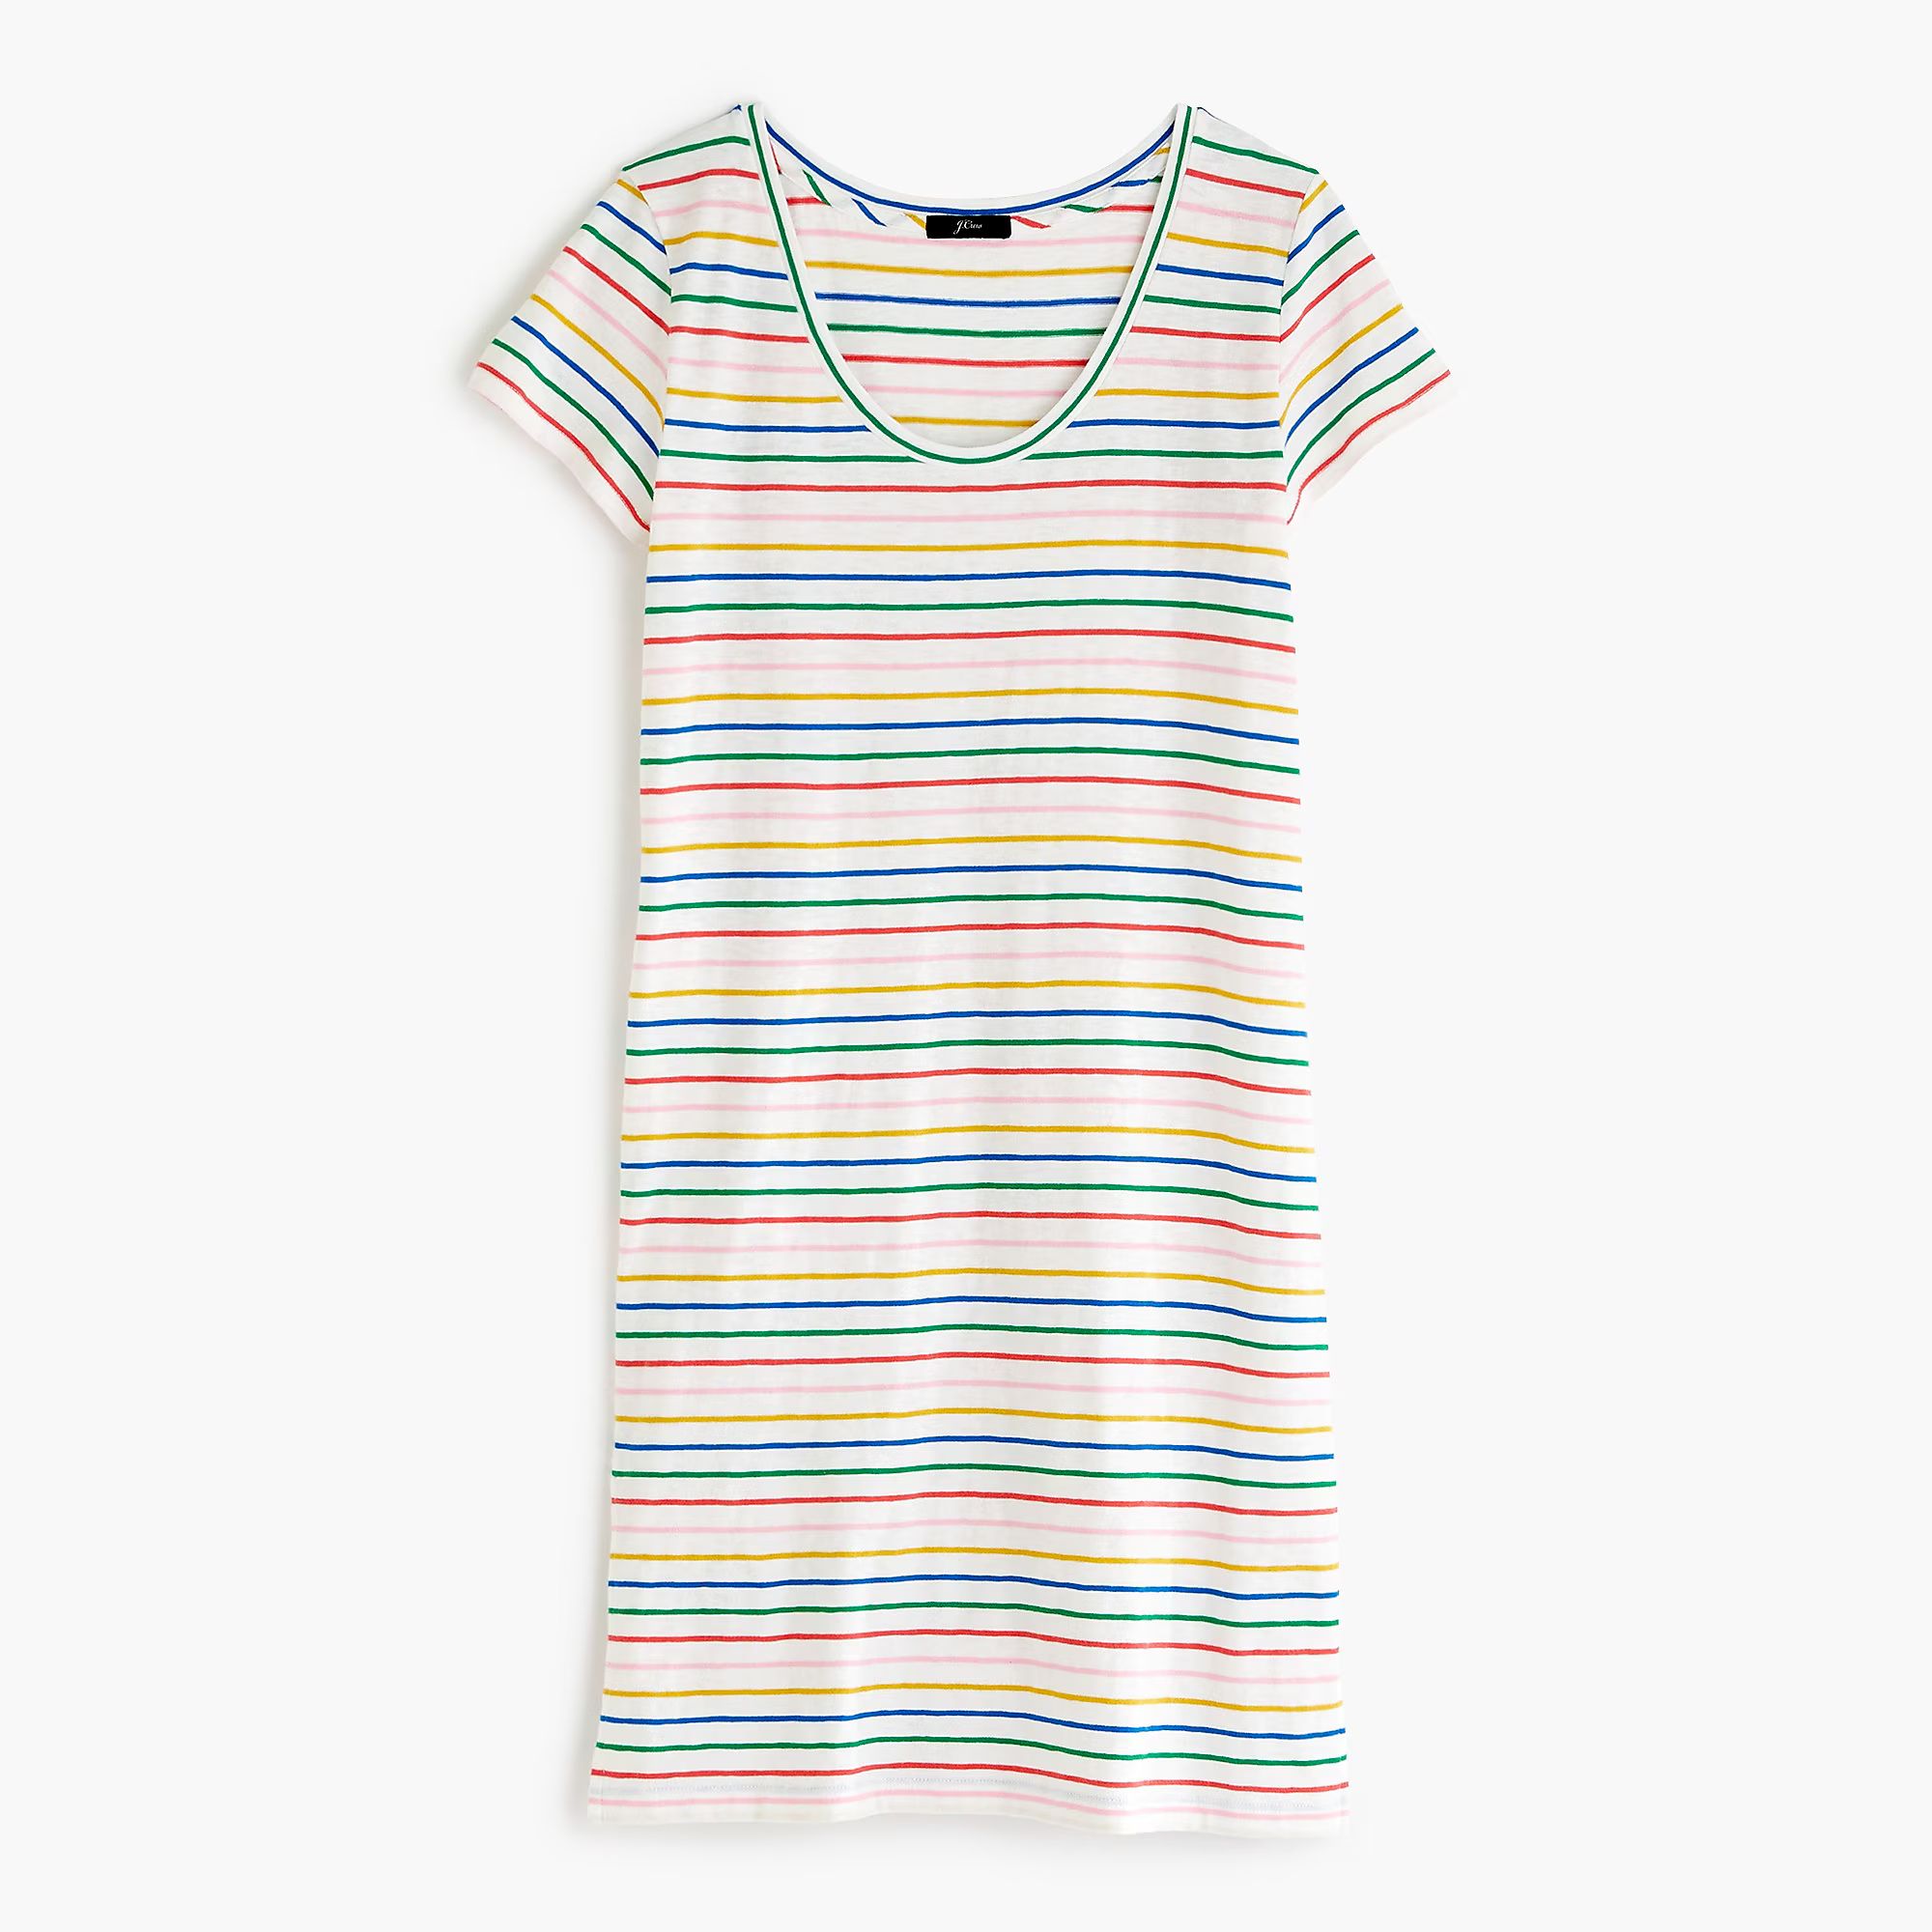 Scoopneck T-shirt dress in rainbow stripe | J.Crew US